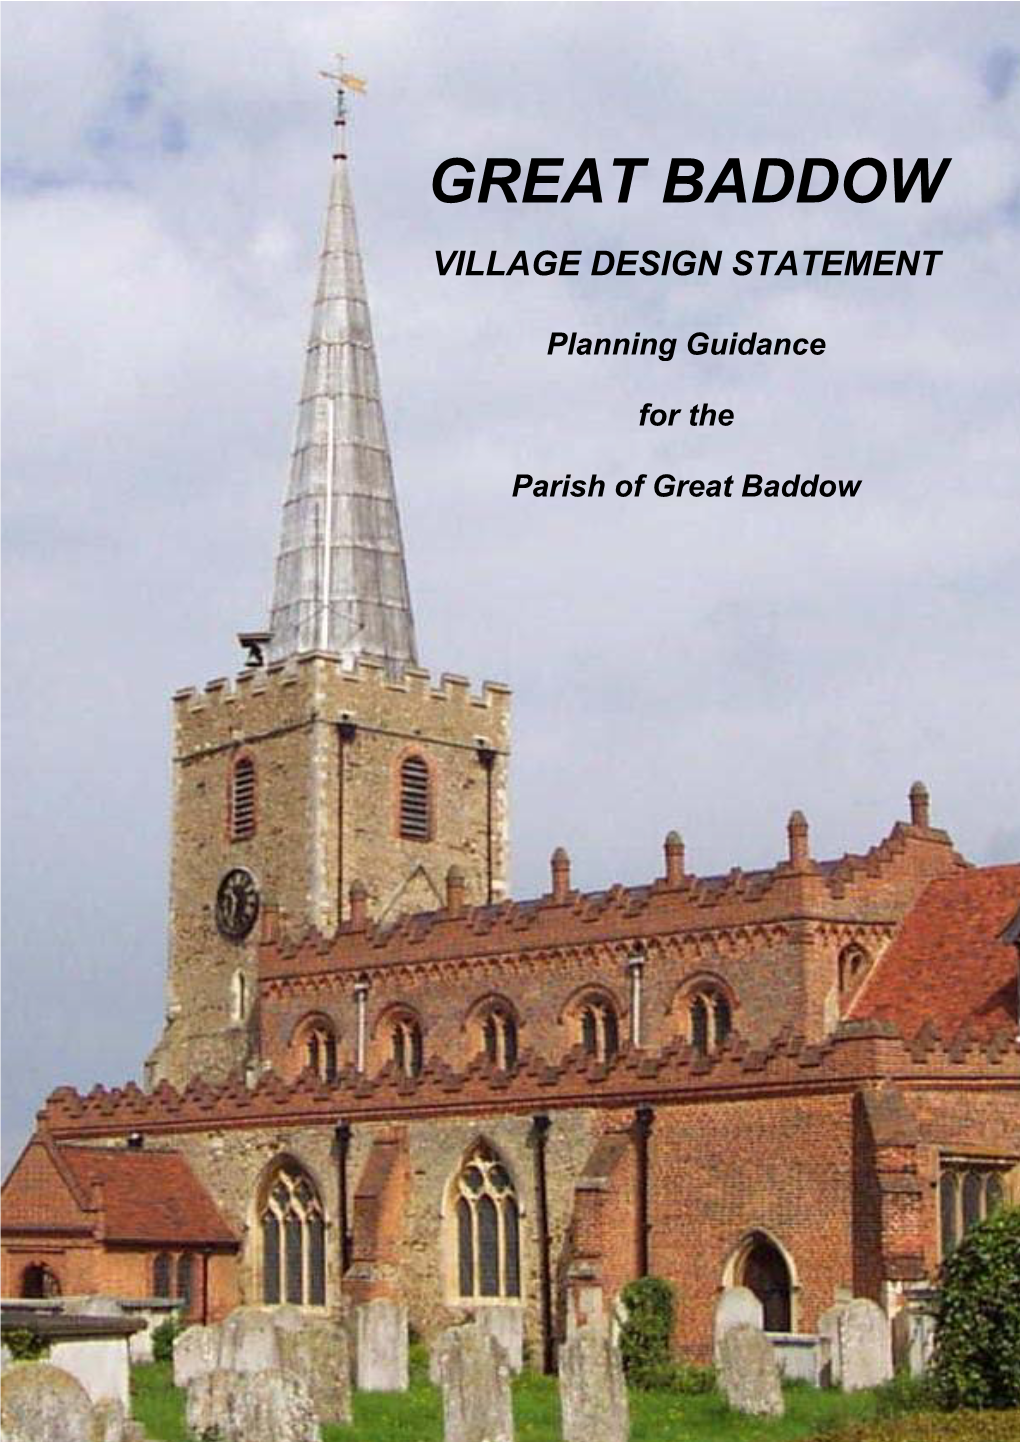 Great Baddow Parish Council